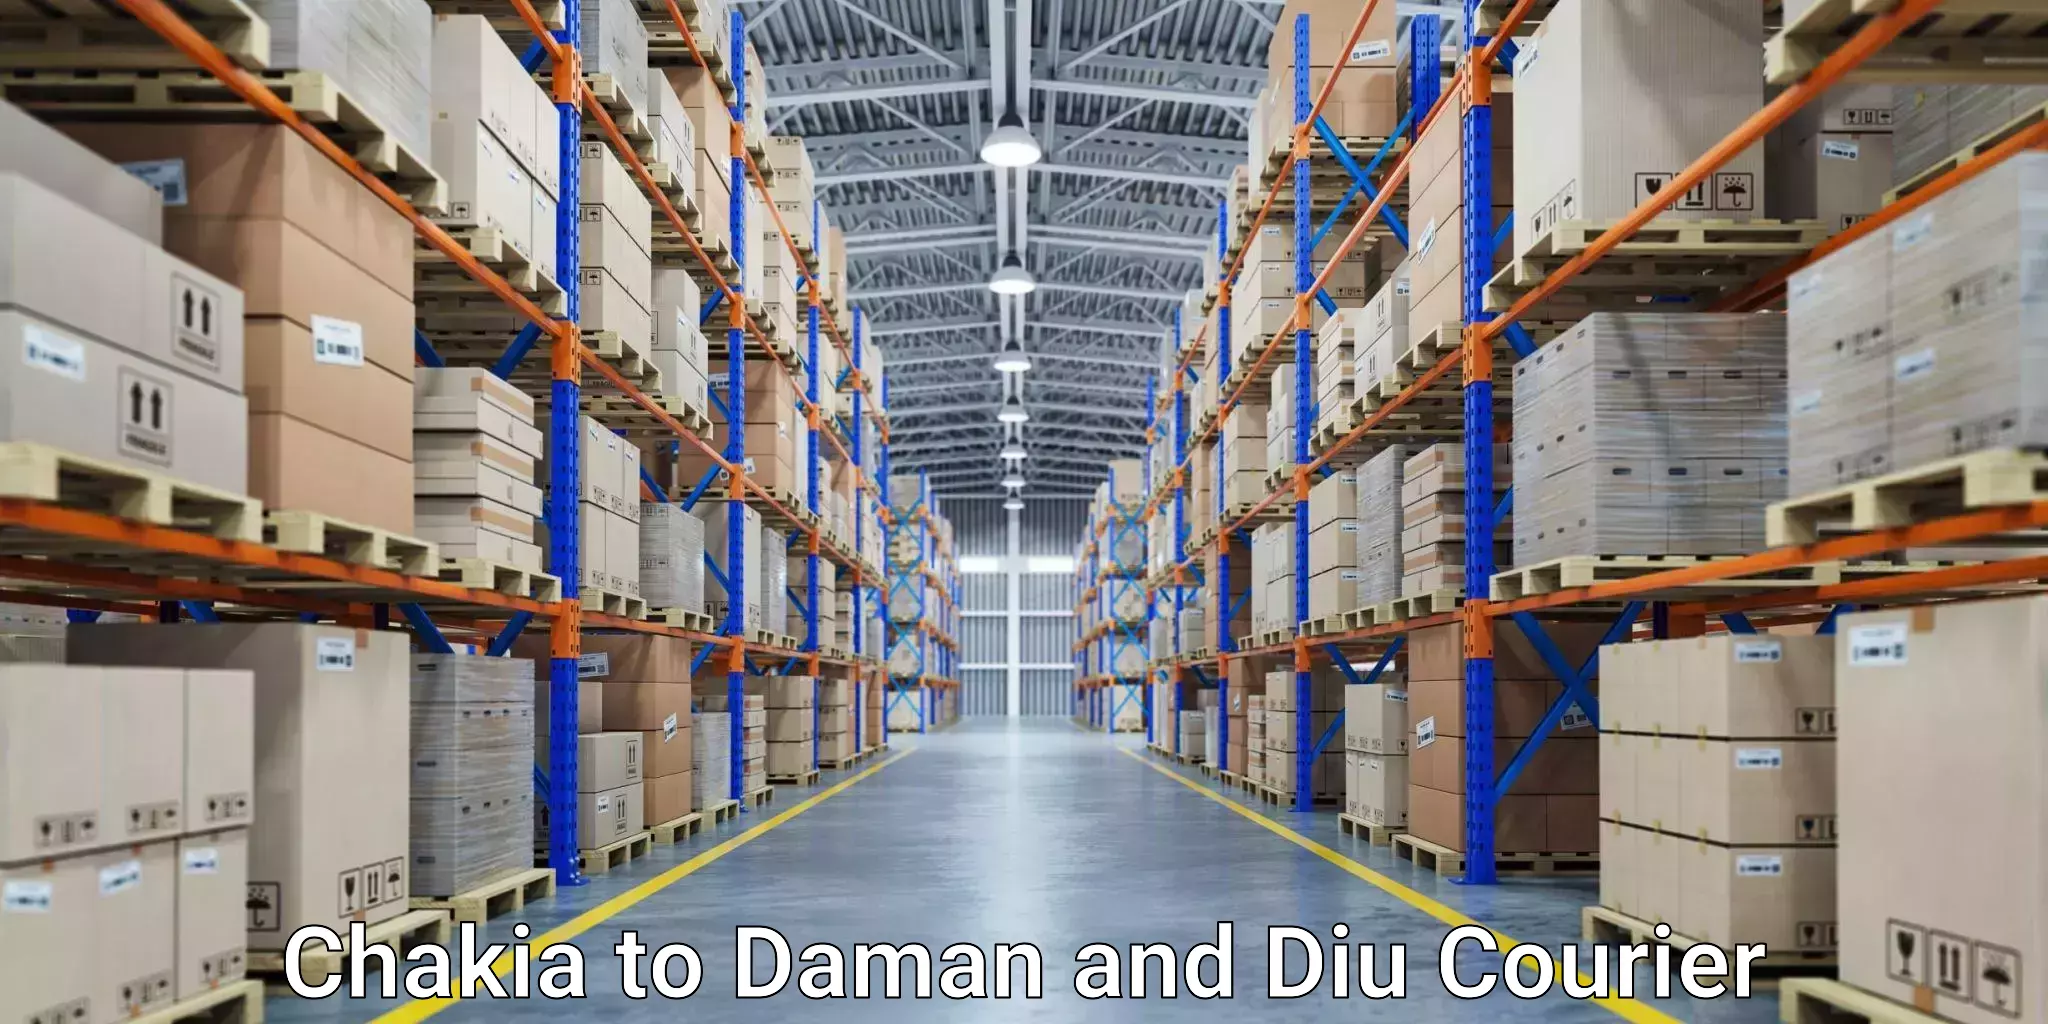 Courier service comparison Chakia to Daman